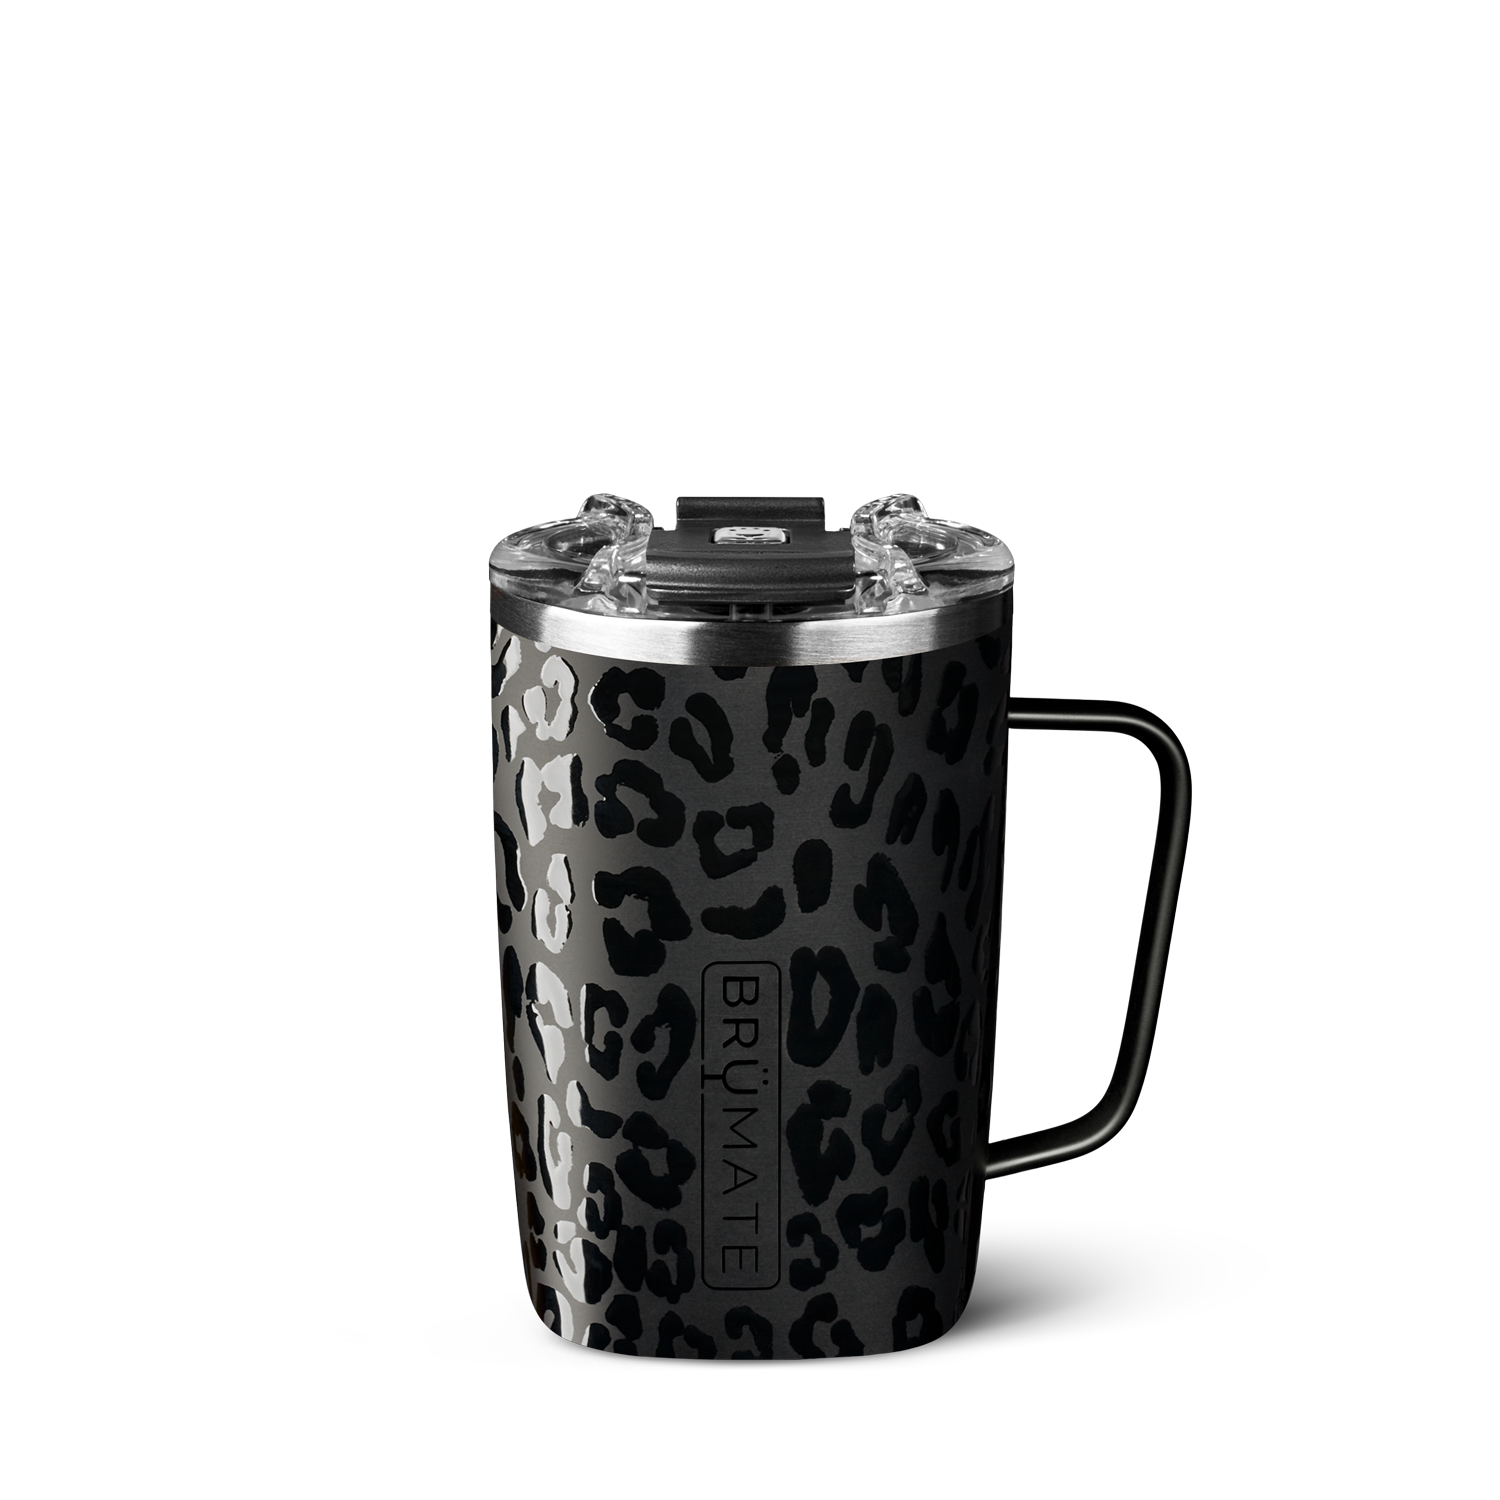 BRUMATE Toddy 16oz Insulated Coffee Mug, Onyx Leopard